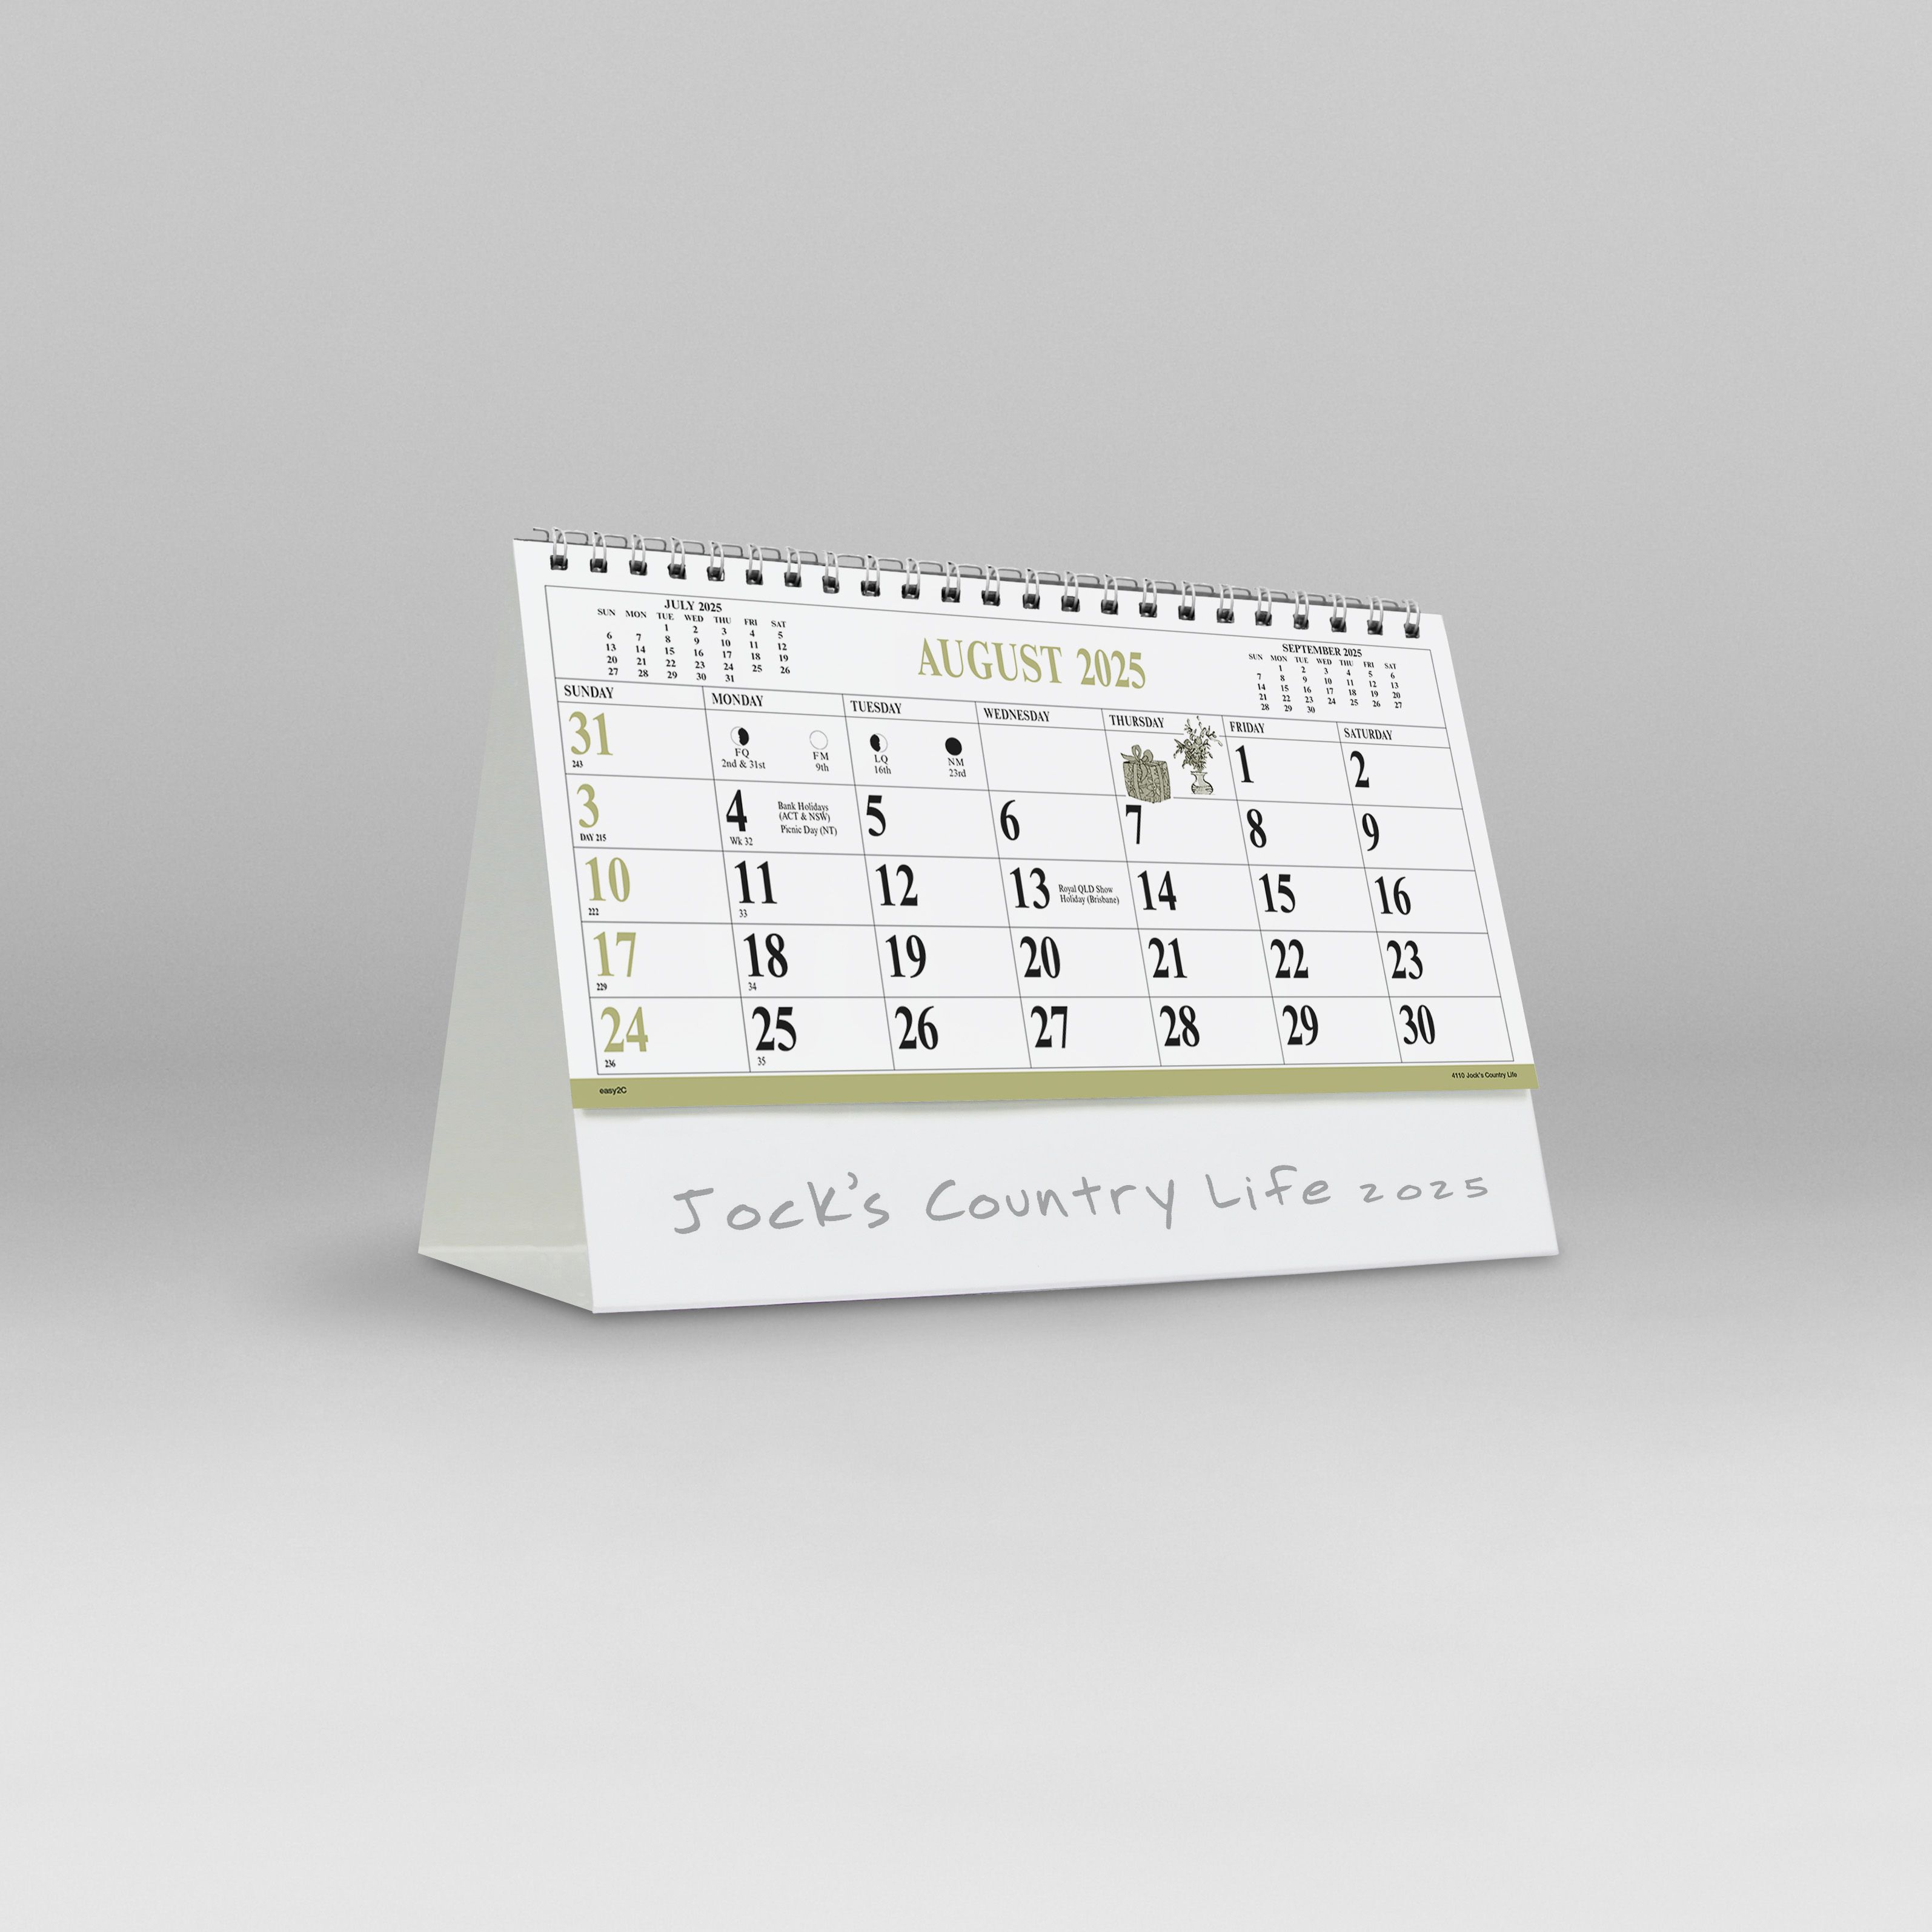 Jocks Country Life Desk retail_4203_25_15